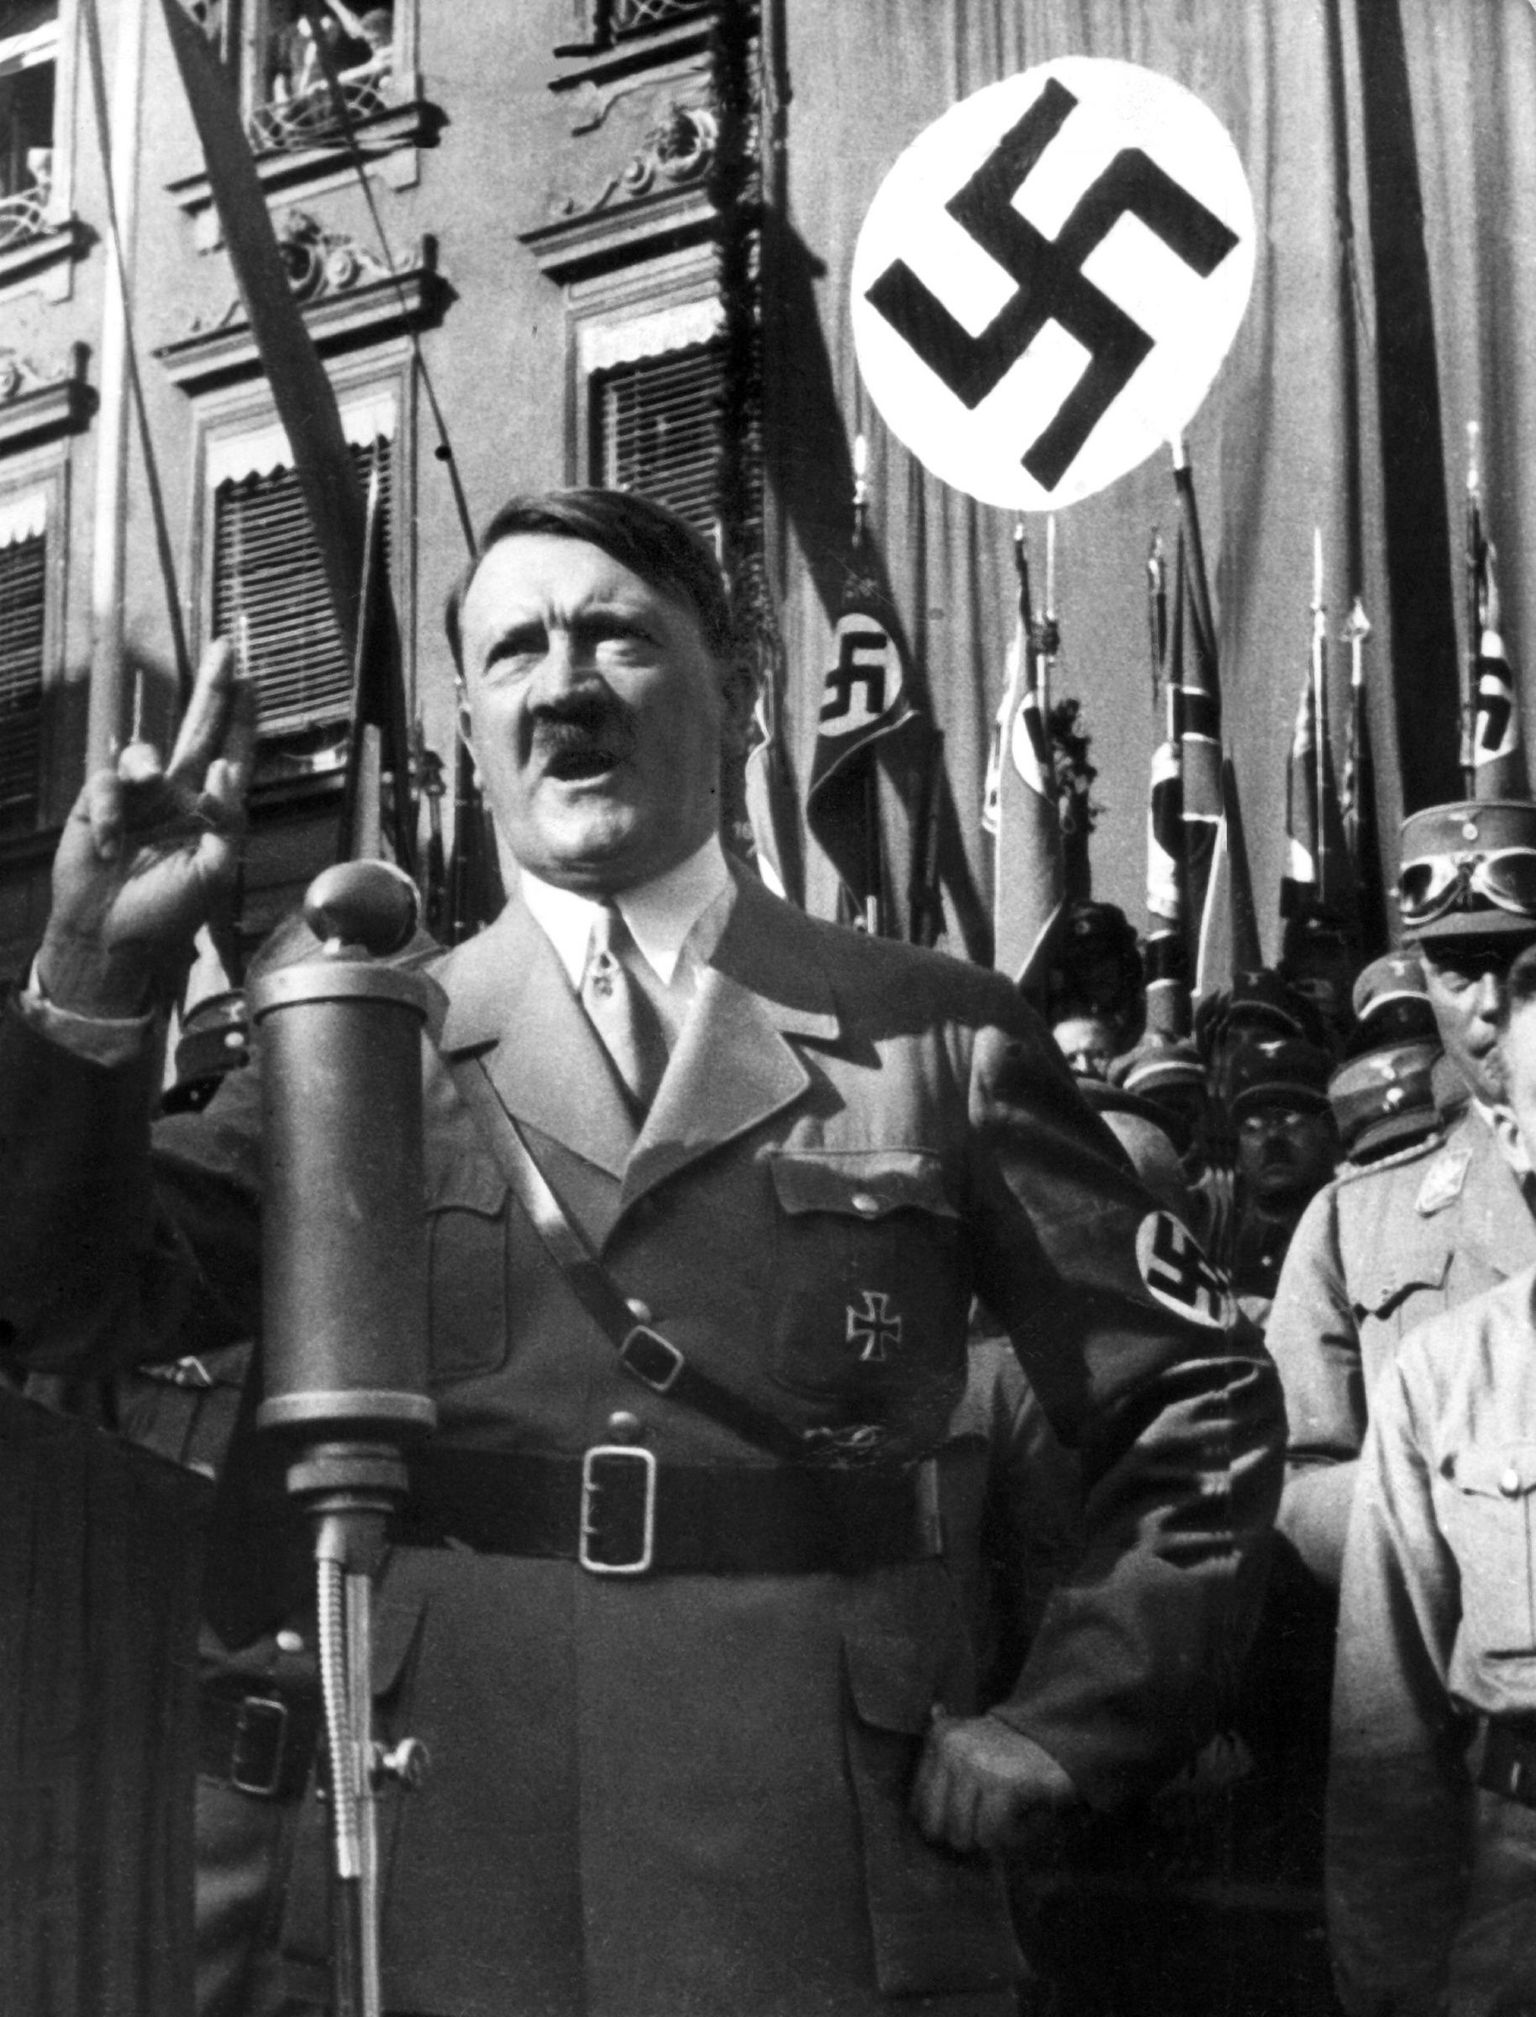 Adolf Hitler kõnet pidamas.